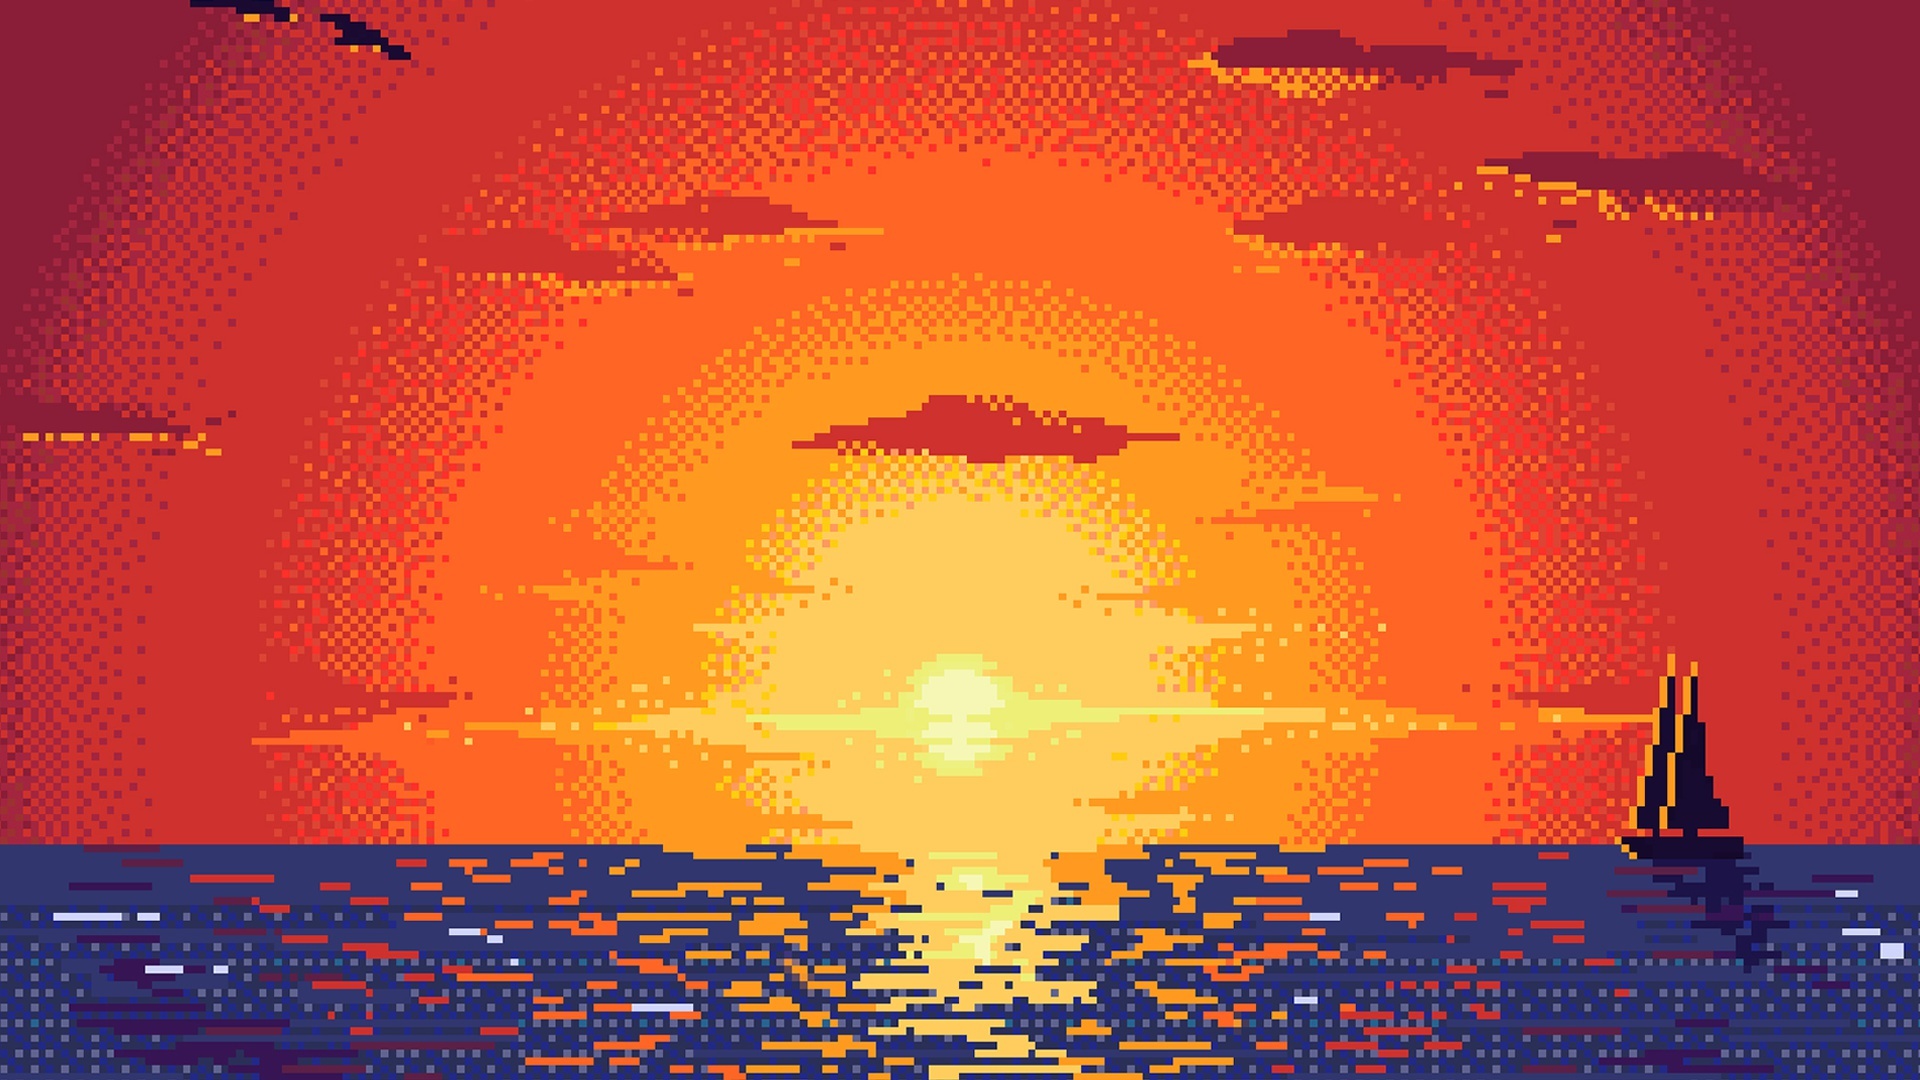 Pixel Sunset Digital Art Wallpaper, Hd Artist 4K Wallpapers, Images And